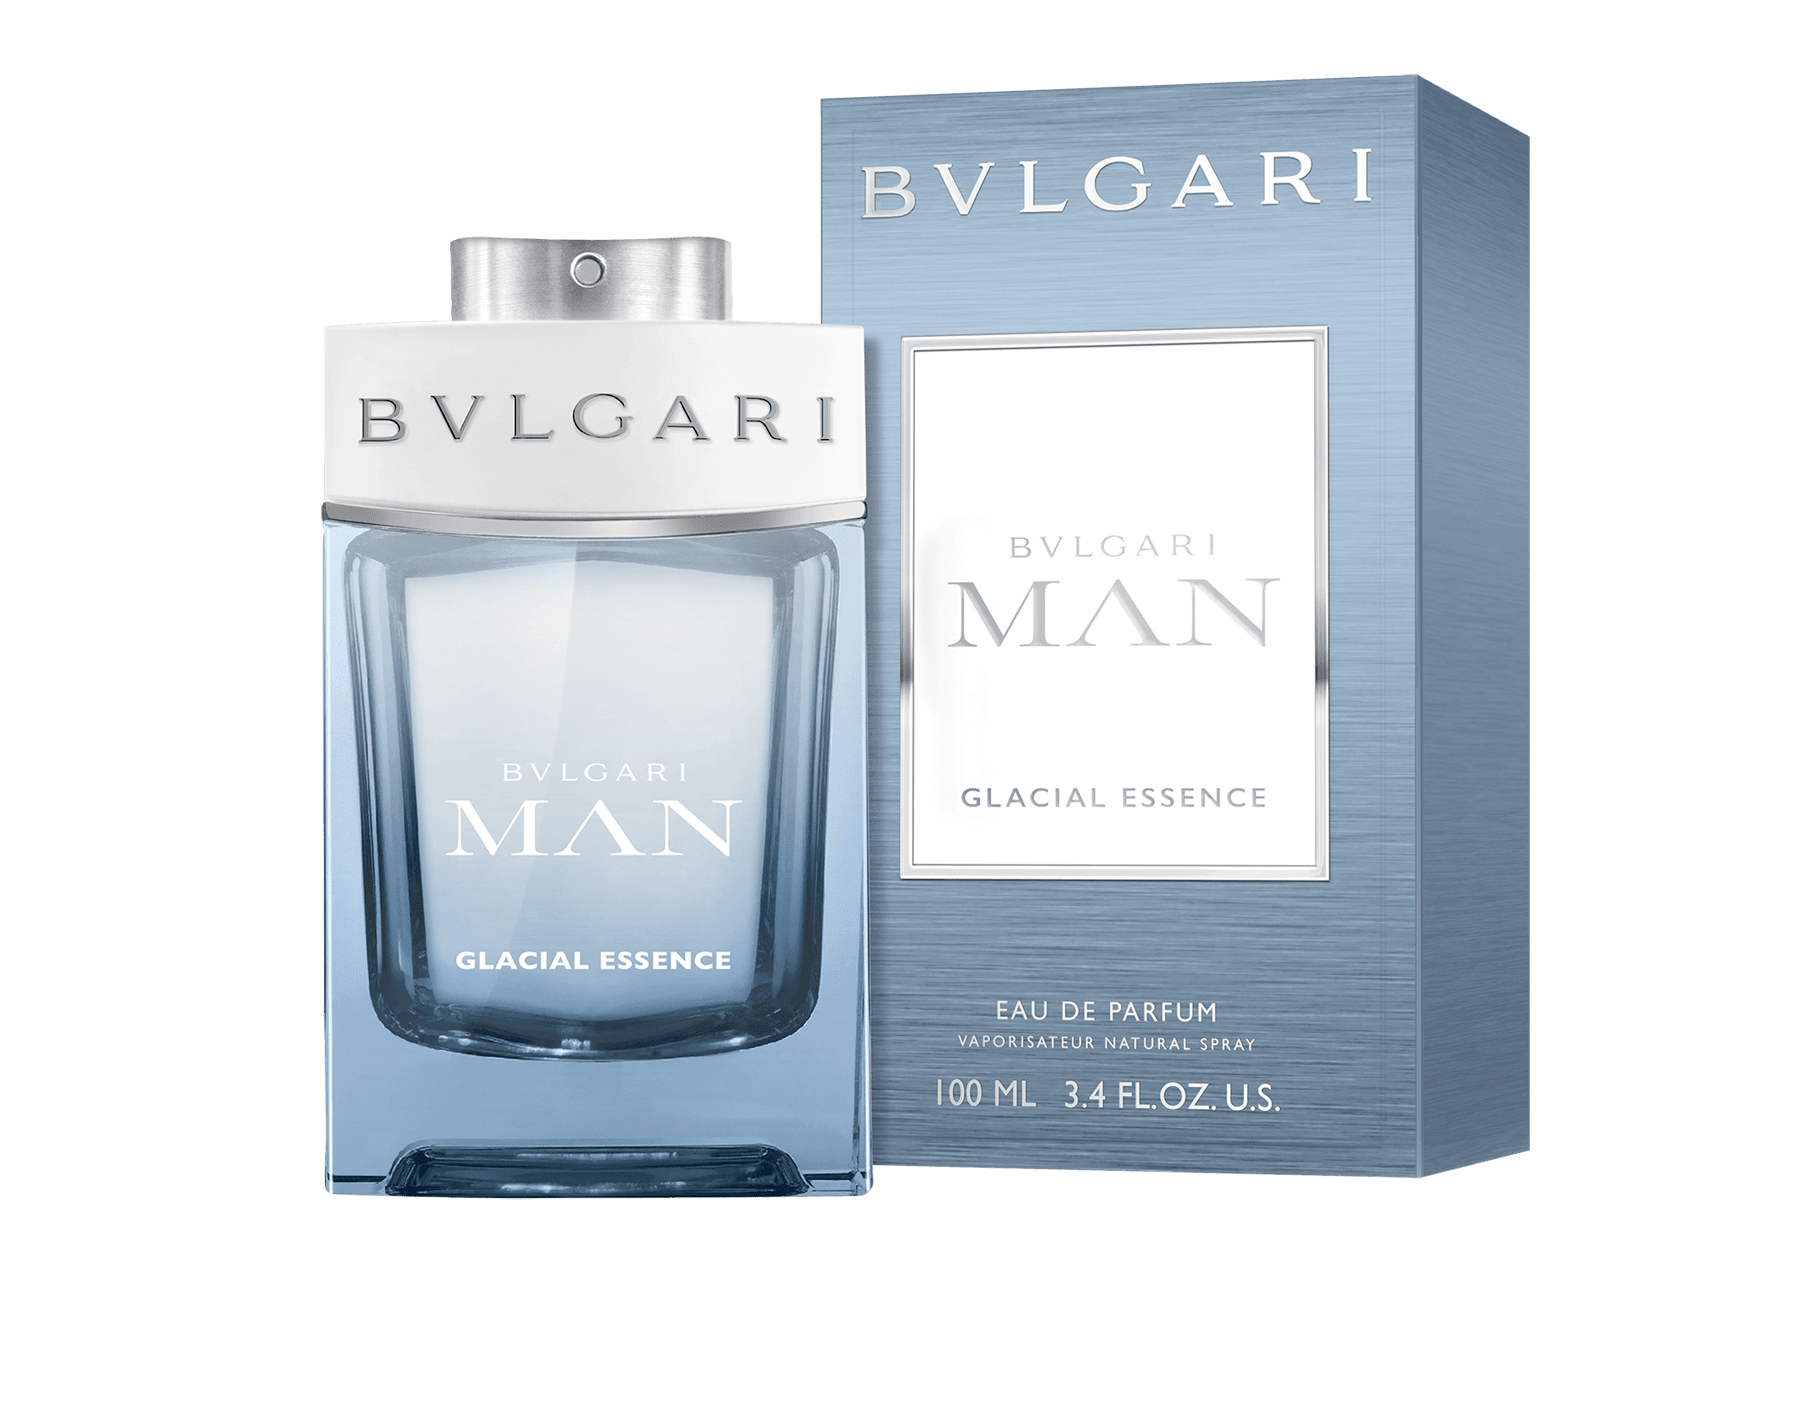 Bvlgari Man Glacial Essence - Parfum Gallerie